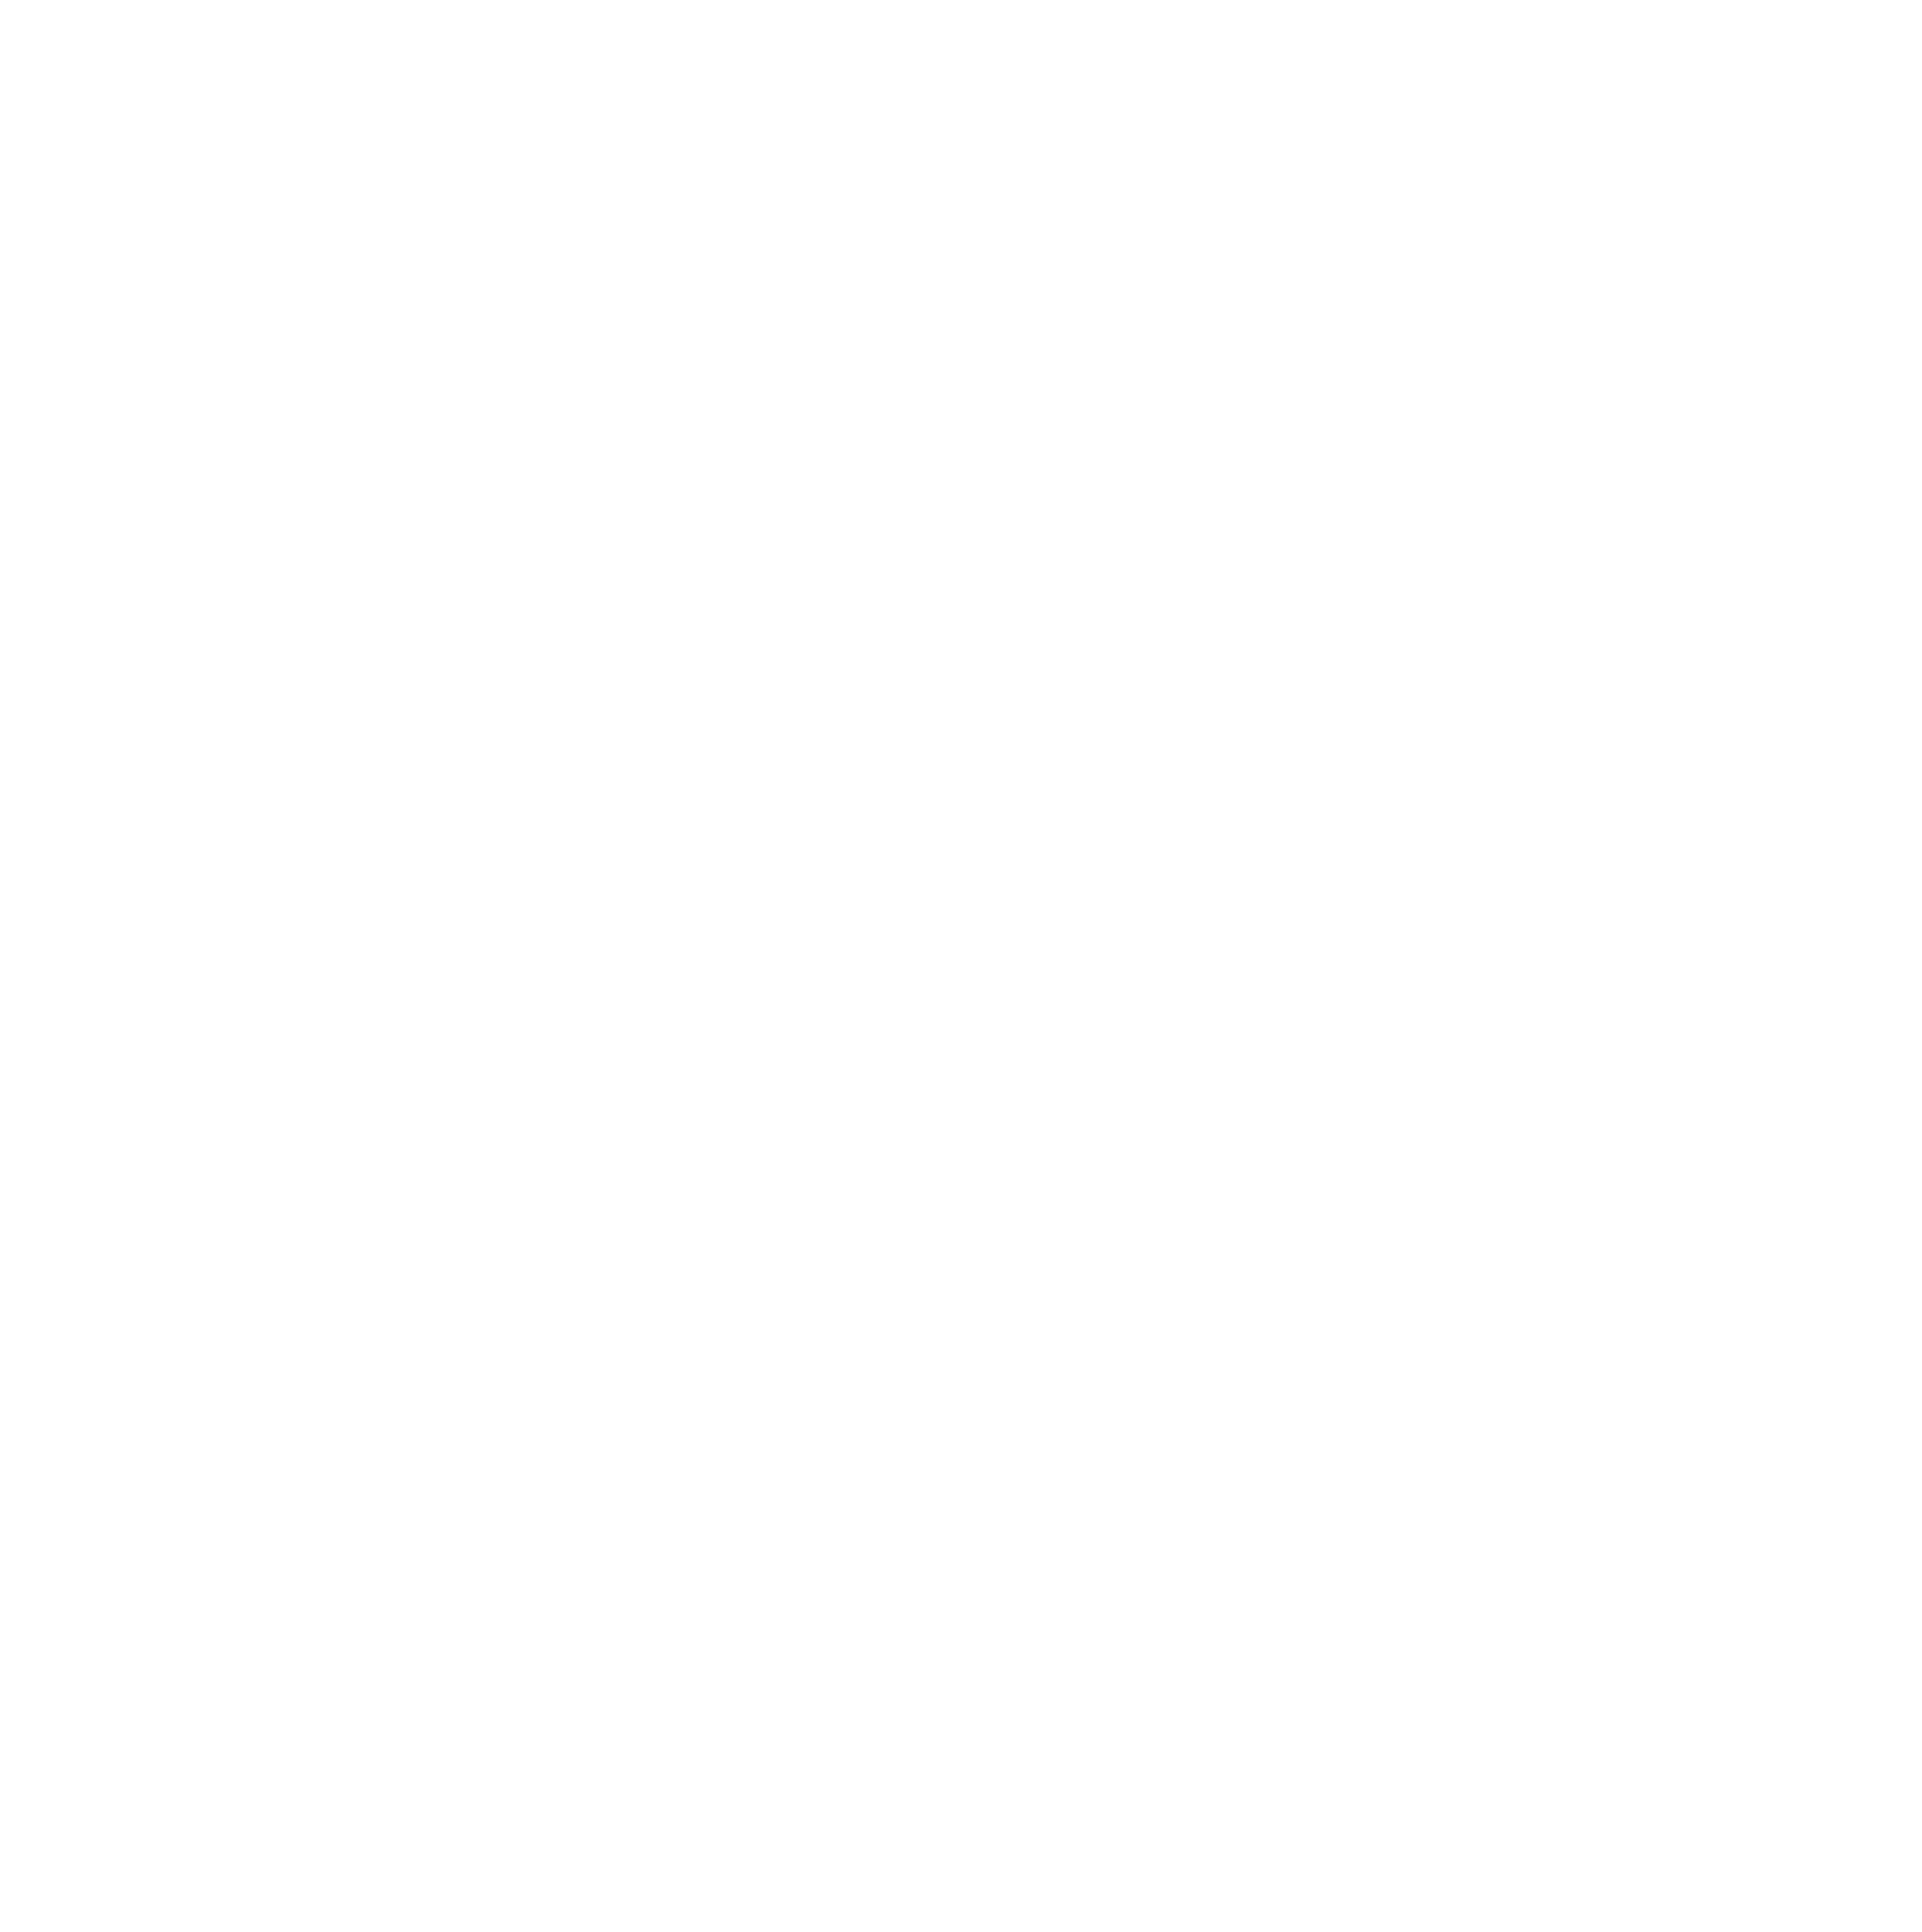 Keeping It Civil logo in white